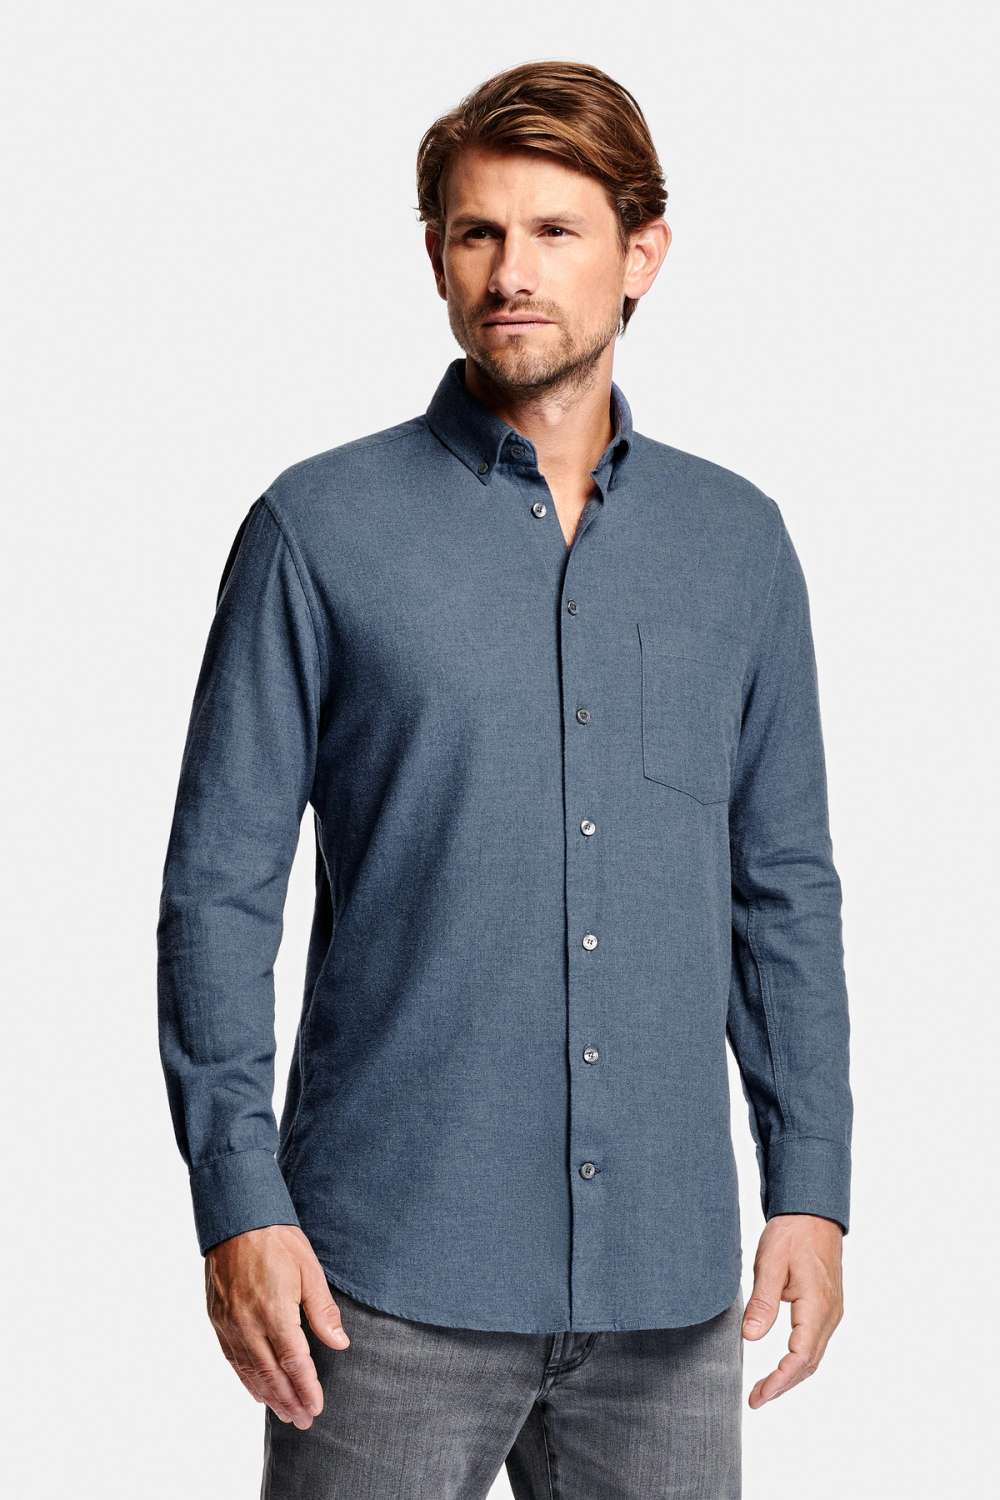 Mavericks - The Flannel Shirt